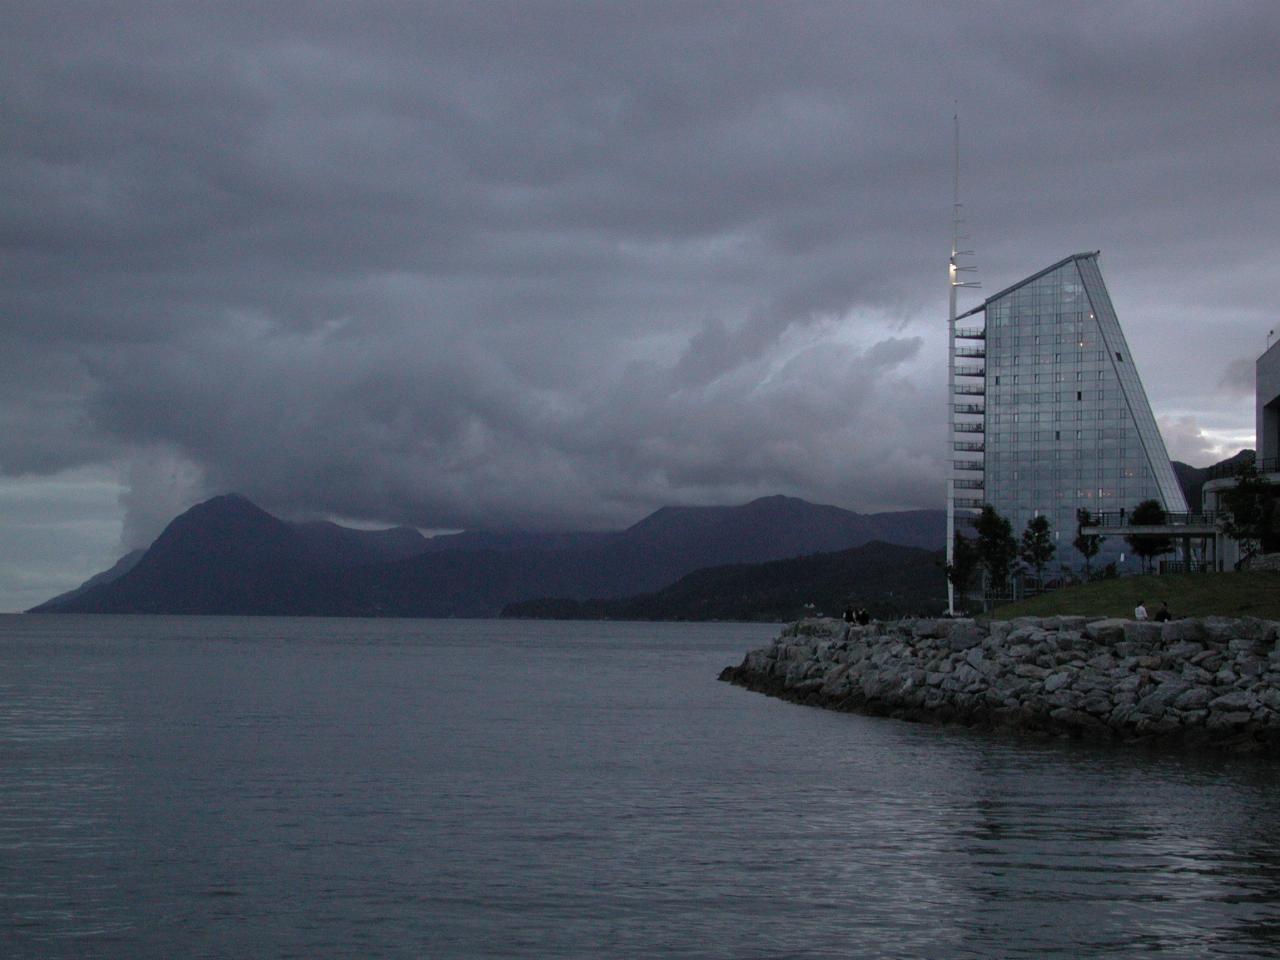 KPLU Viking Jazz: Rica Seilet (Sail) Hotel, Molde, Norway and mountains behind